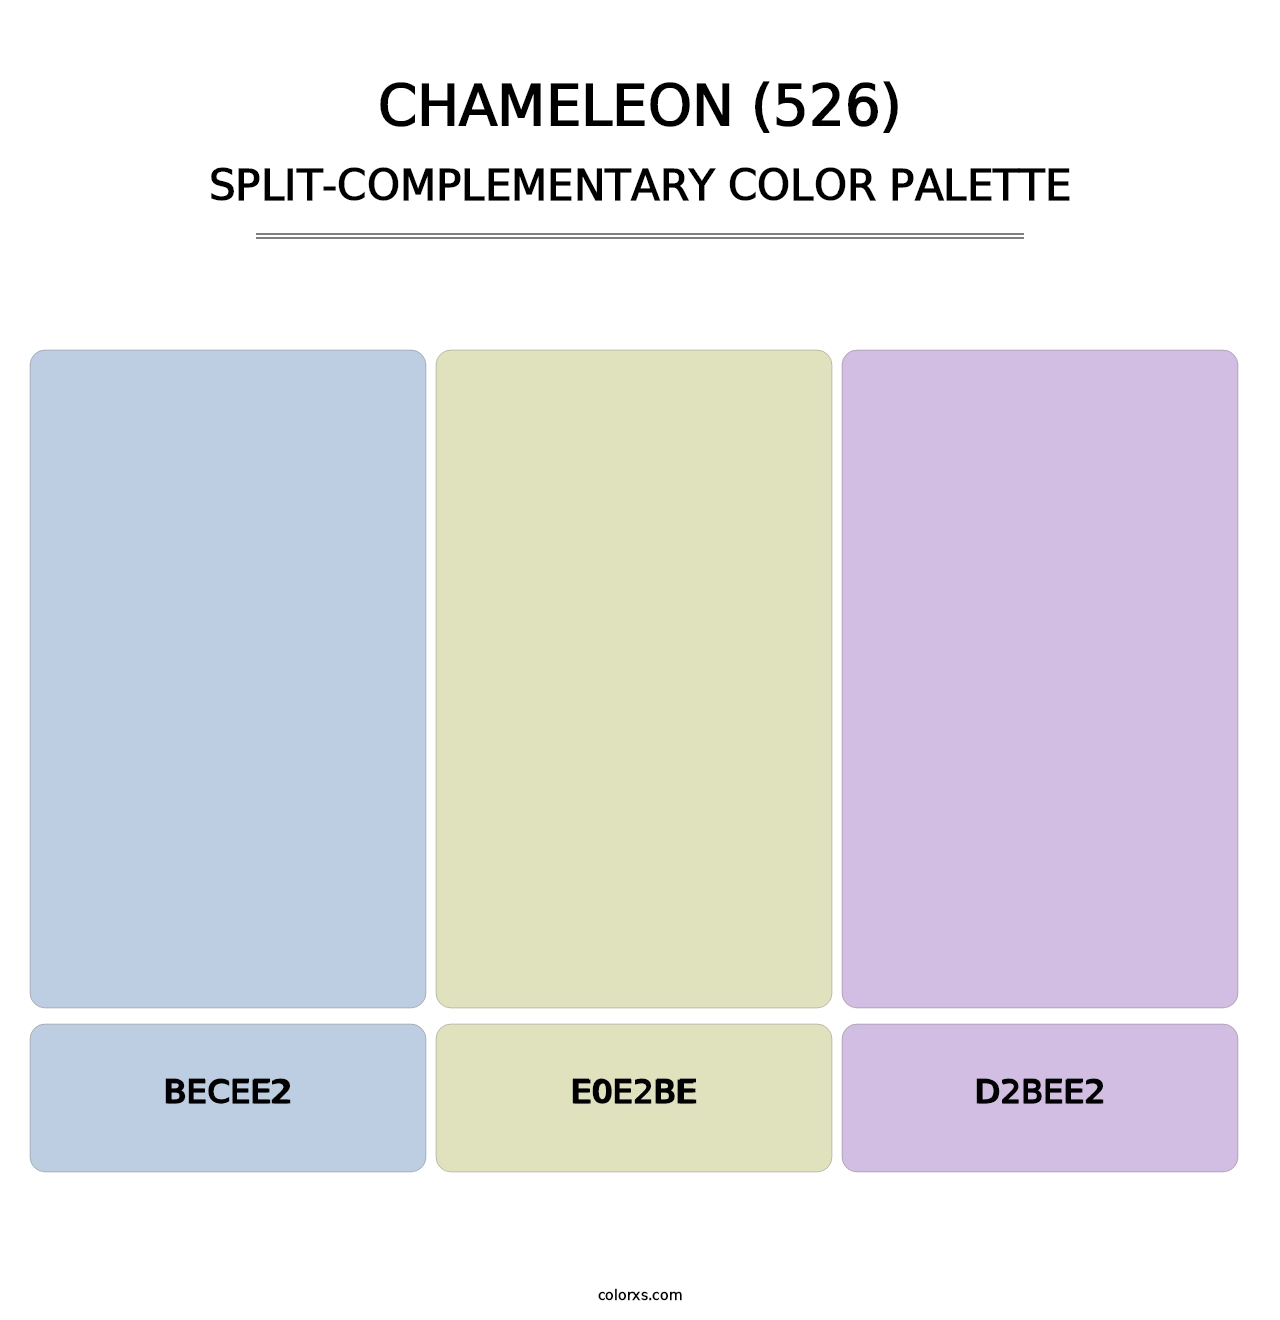 Chameleon (526) - Split-Complementary Color Palette